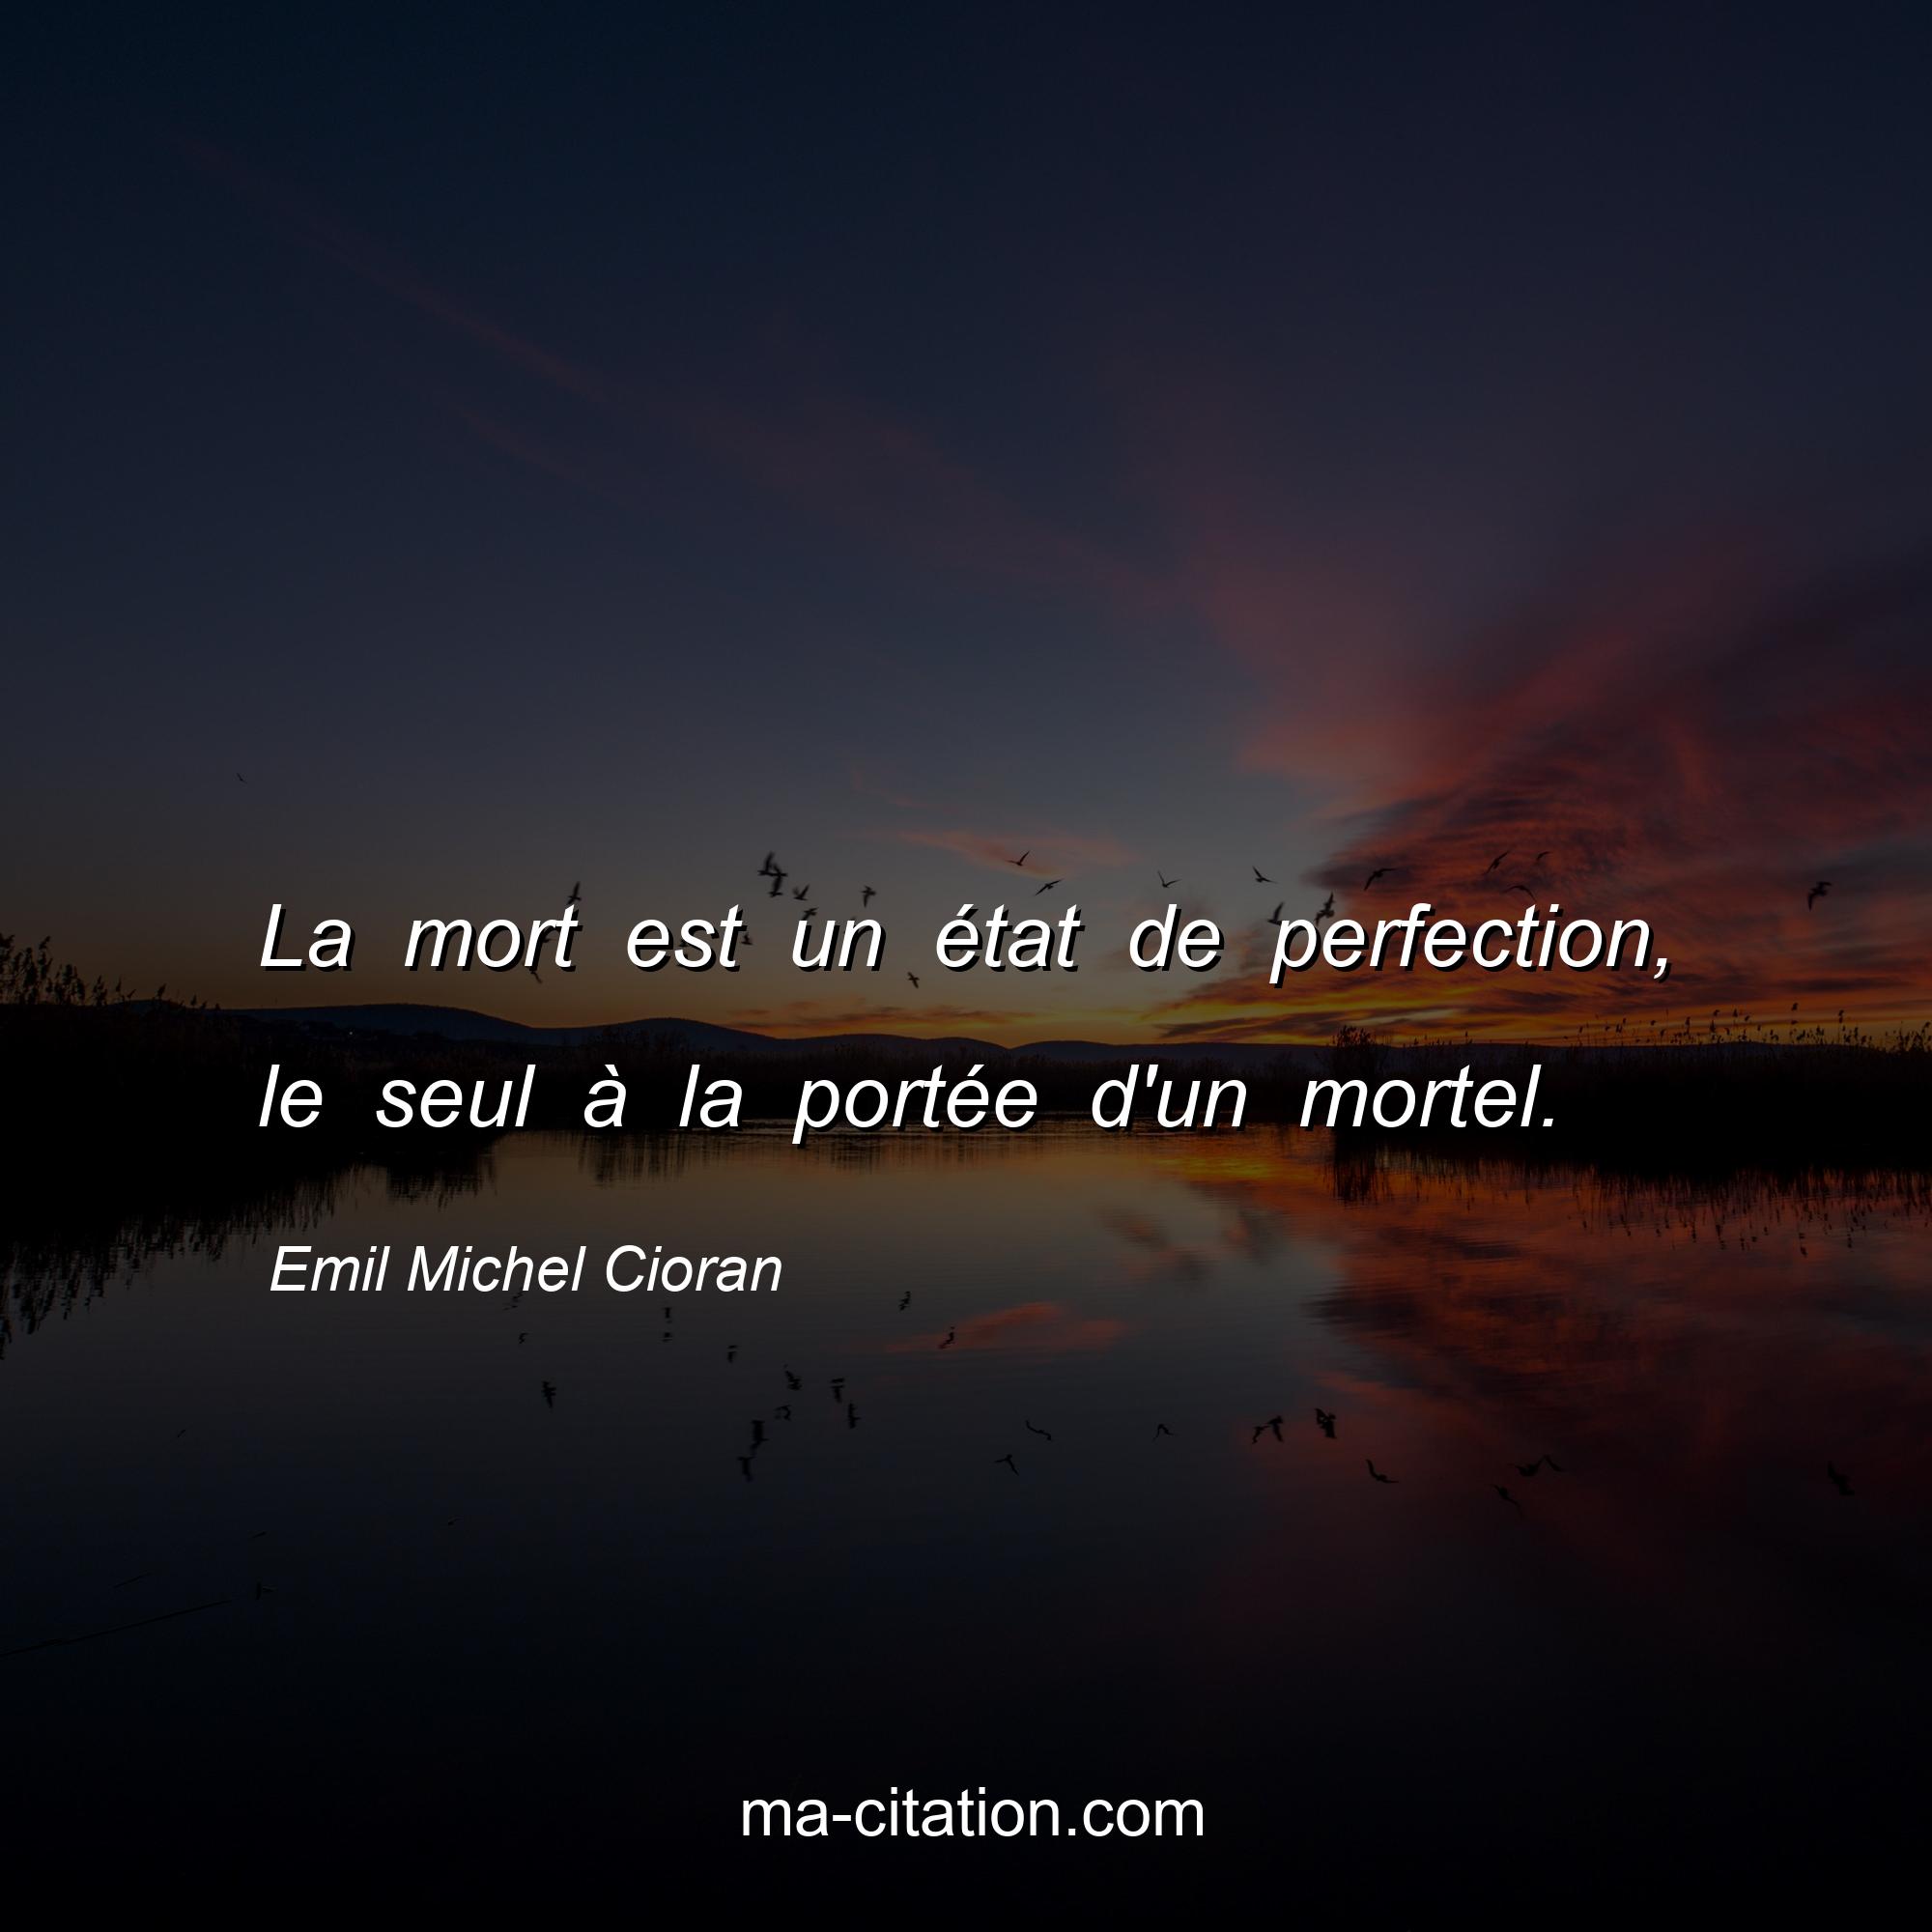 Emil Michel Cioran : La mort est un état de perfection, le seul à la portée d'un mortel.